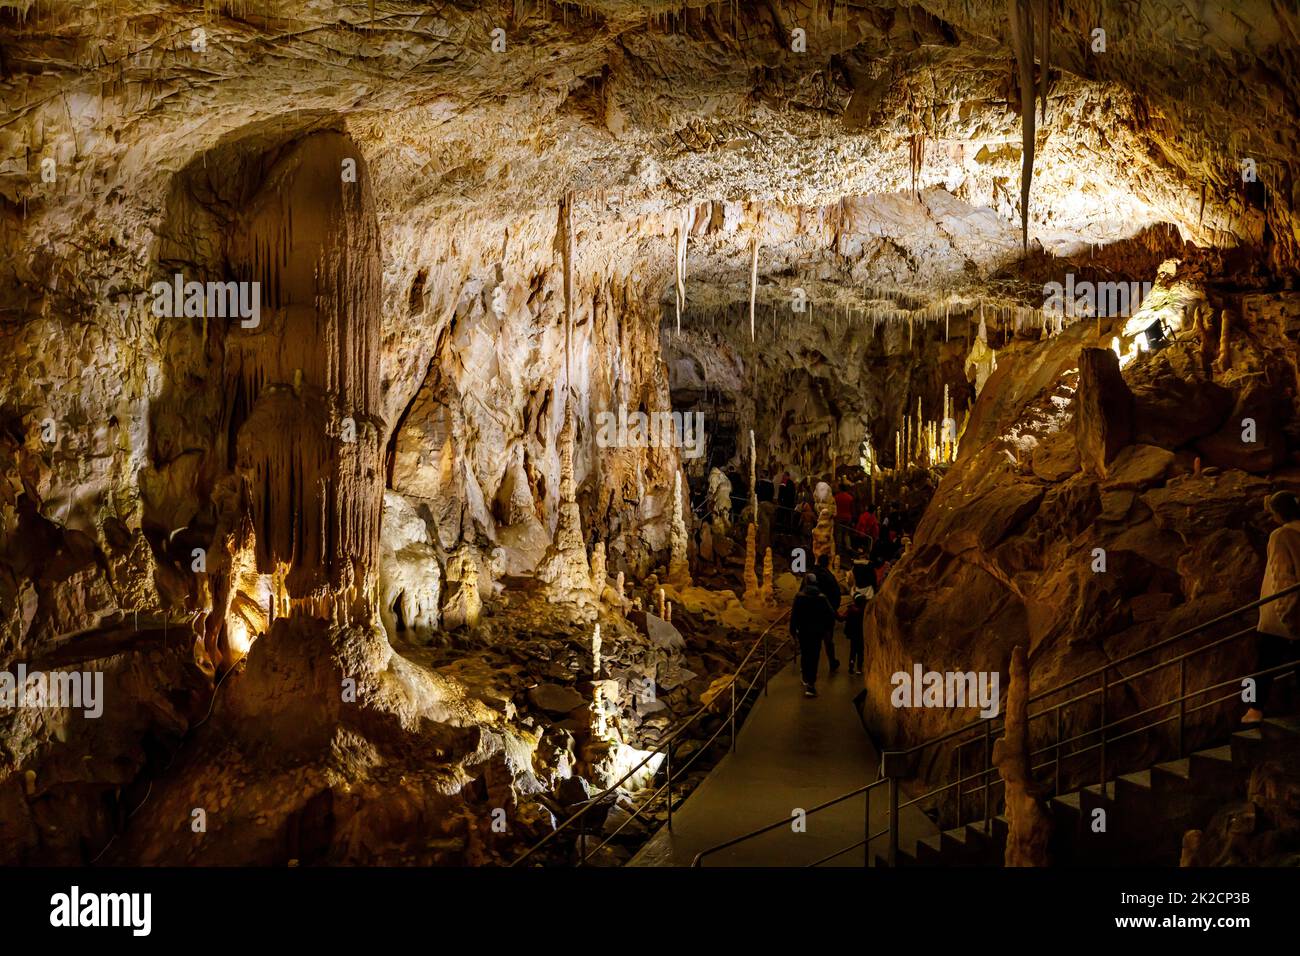 Die Bärenhöhle pestera ursilor bei chiscau in rumänien Stockfoto